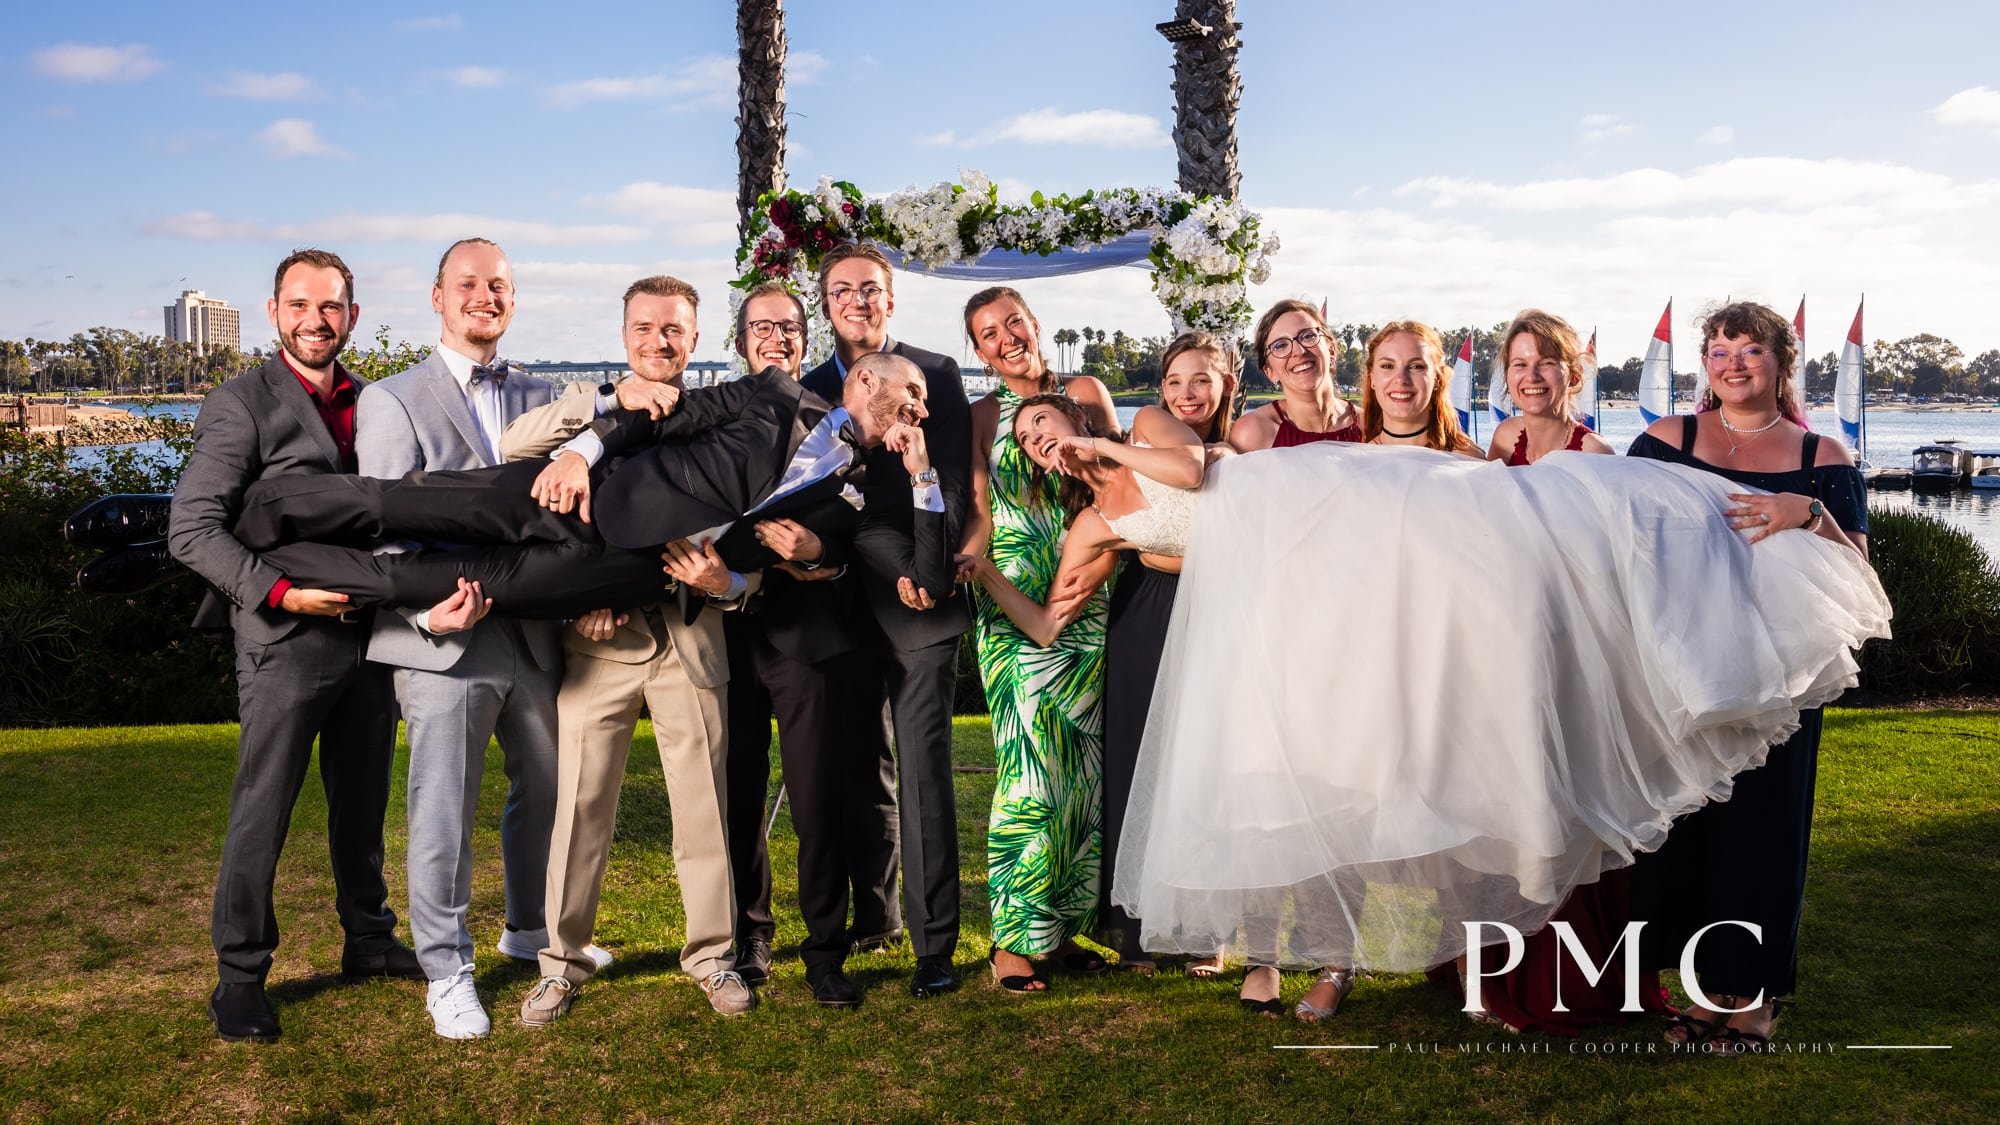 Paradise Point Resort & Spa - Summer Mission Bay Wedding - Best San Diego Wedding Photographer-69.jpg